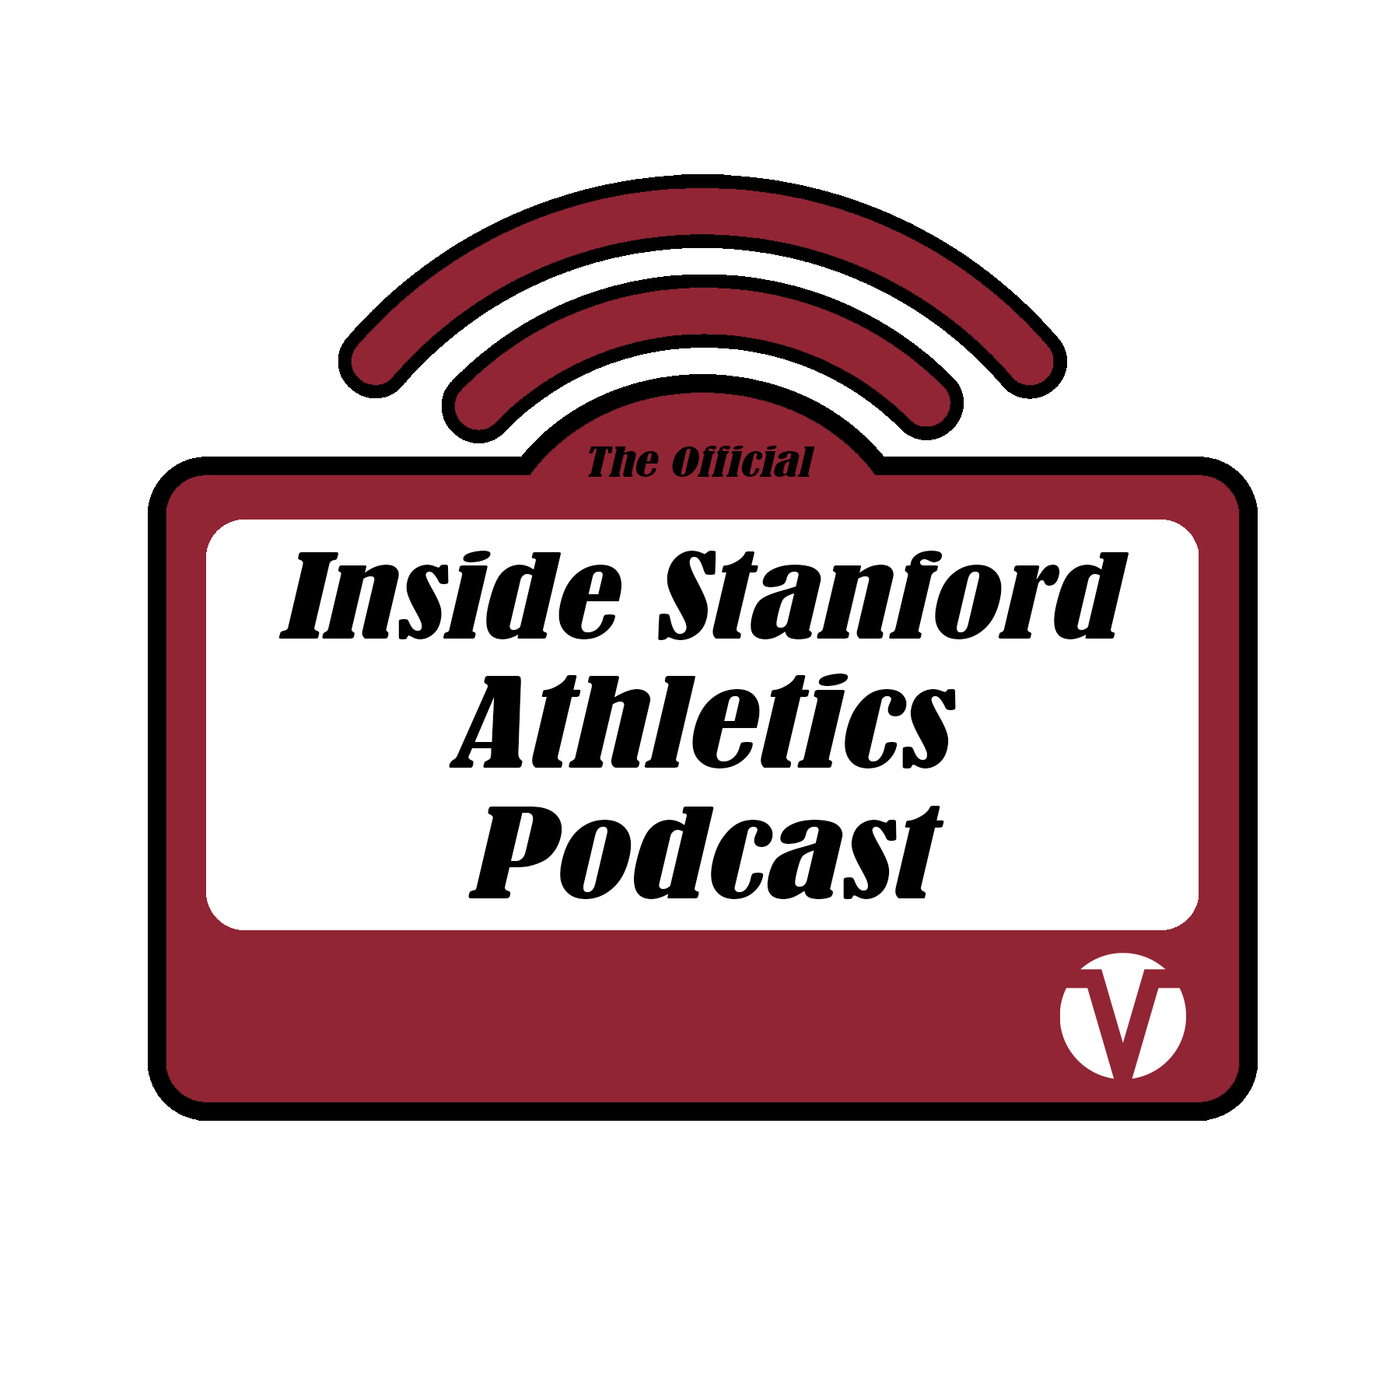 Inside Stanford Athletics